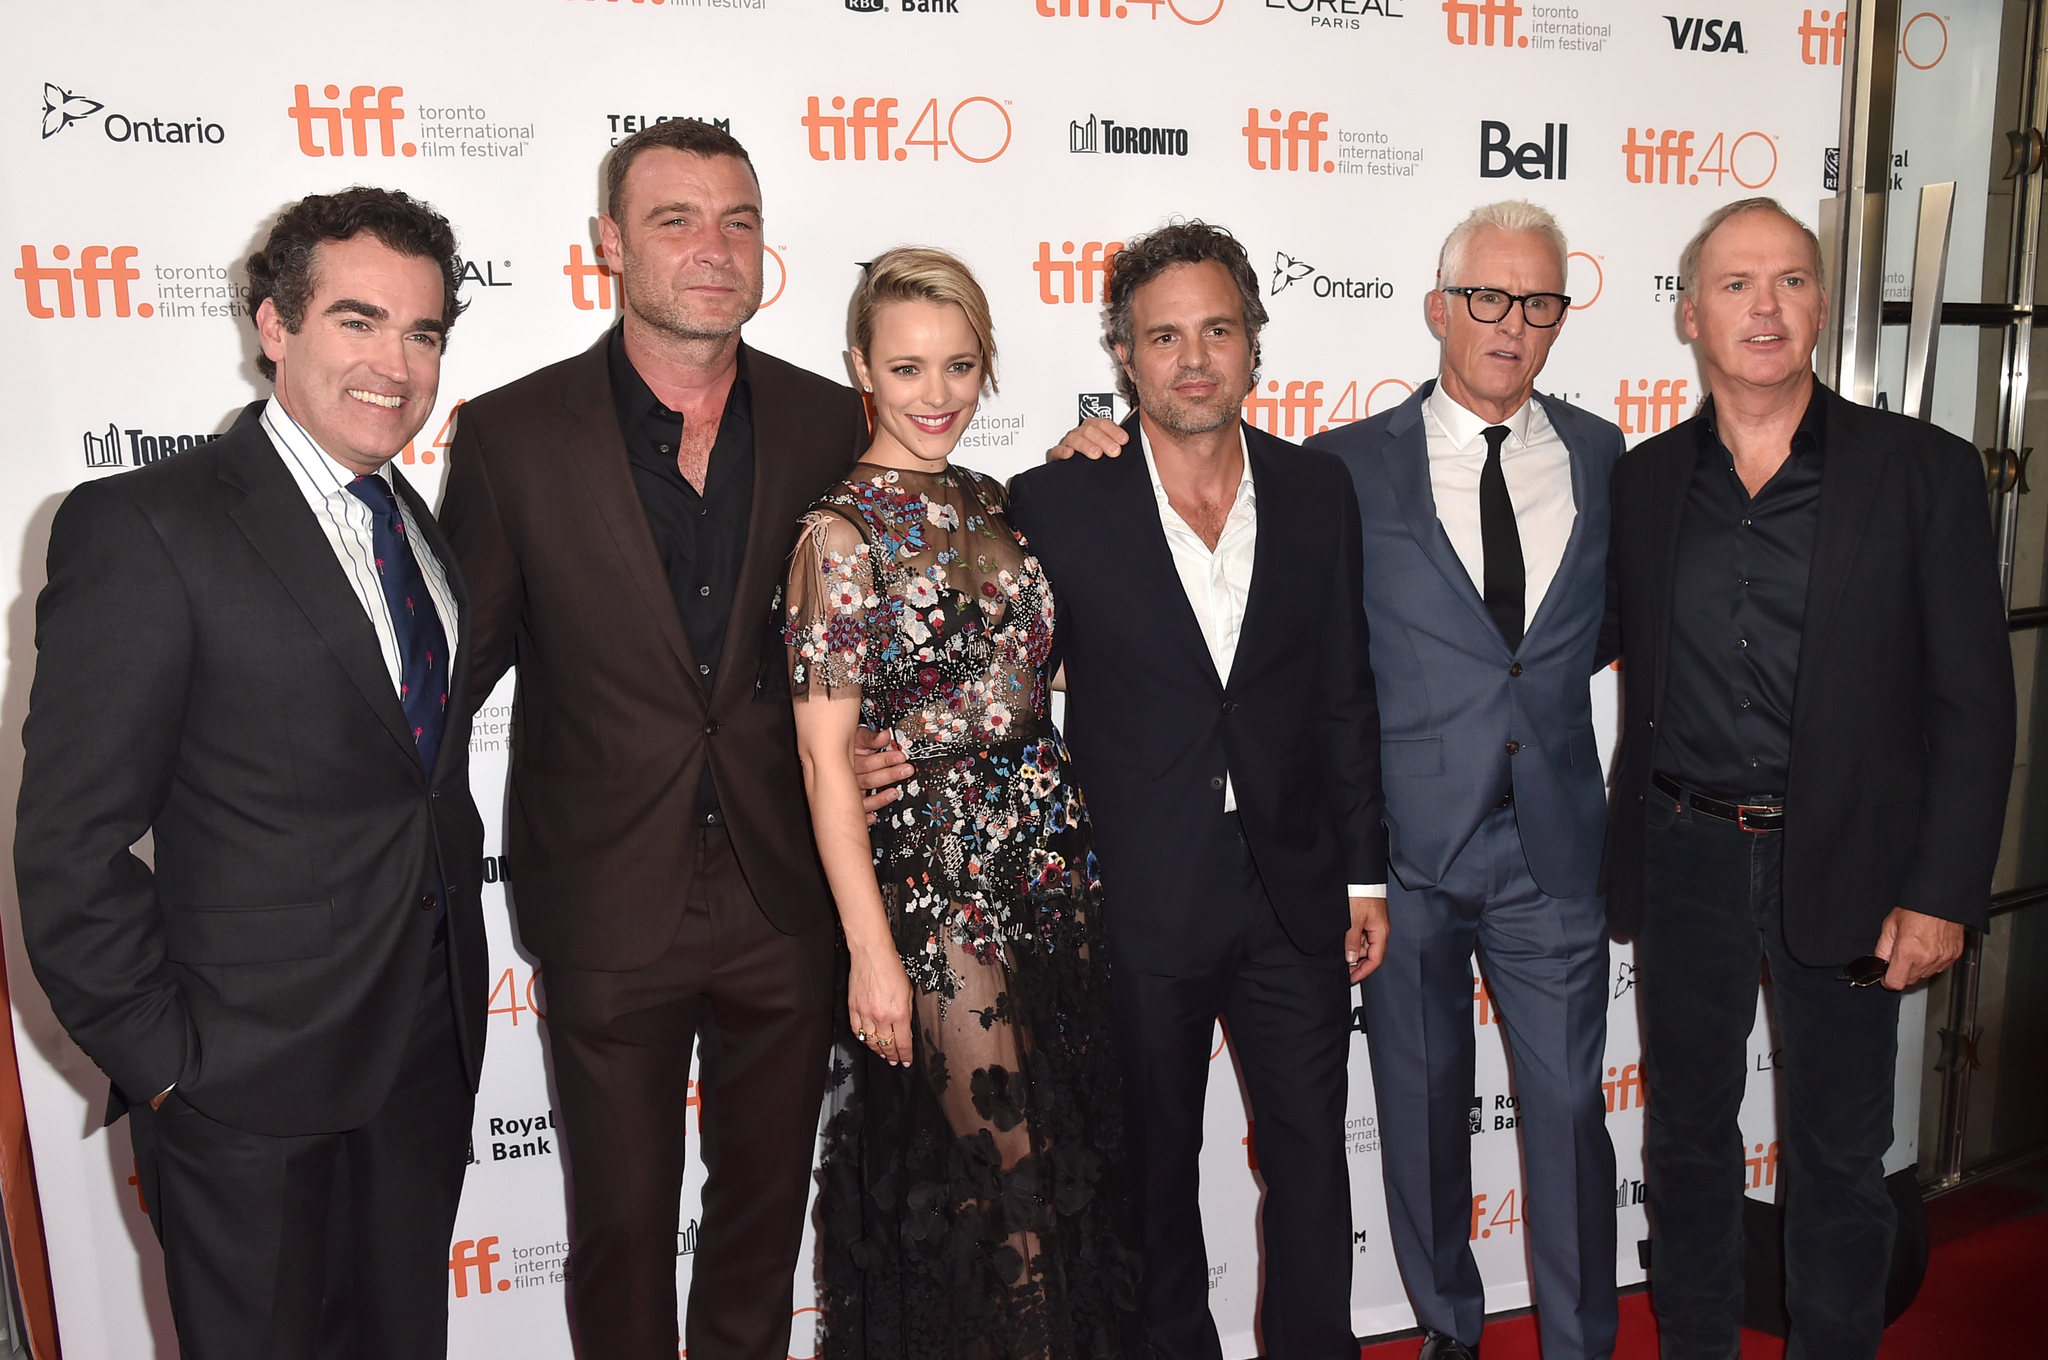 Michael Keaton, Liev Schreiber, Brian d'Arcy James, Mark Ruffalo, John Slattery, Rachel McAdams and Brian D'Arcy at event of Spotlight (2015)